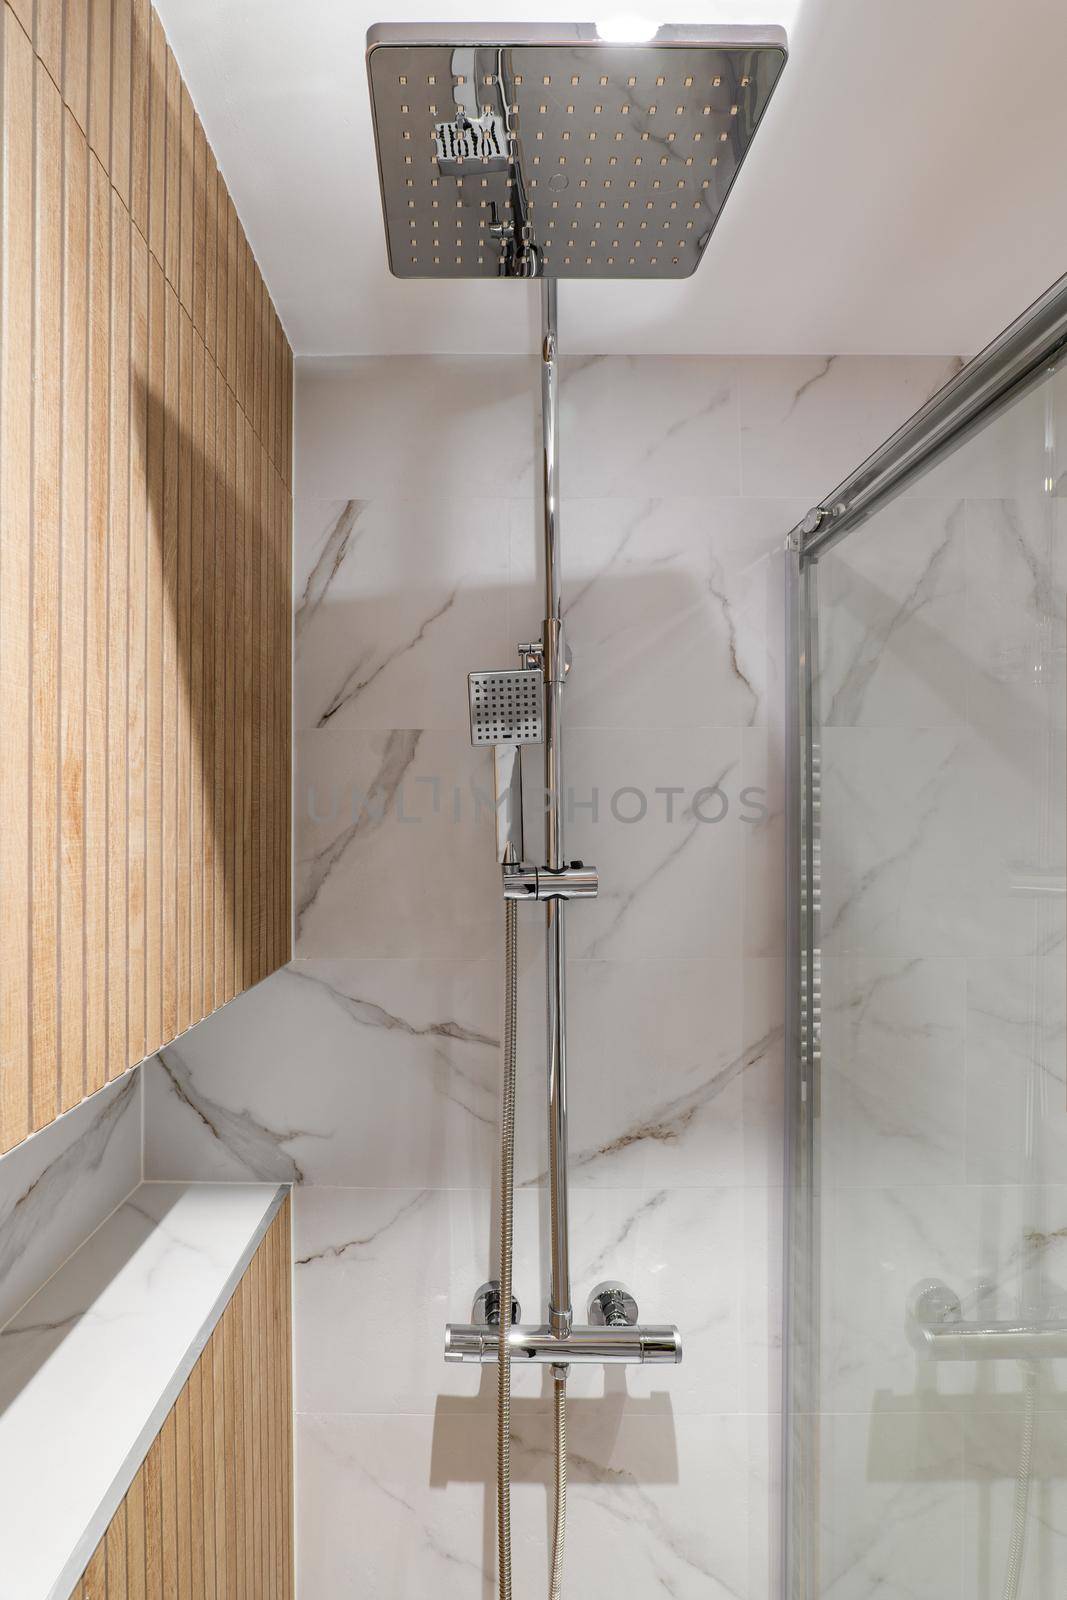 Big shower head and wooden finishing in interior of modern refurbished bathroom